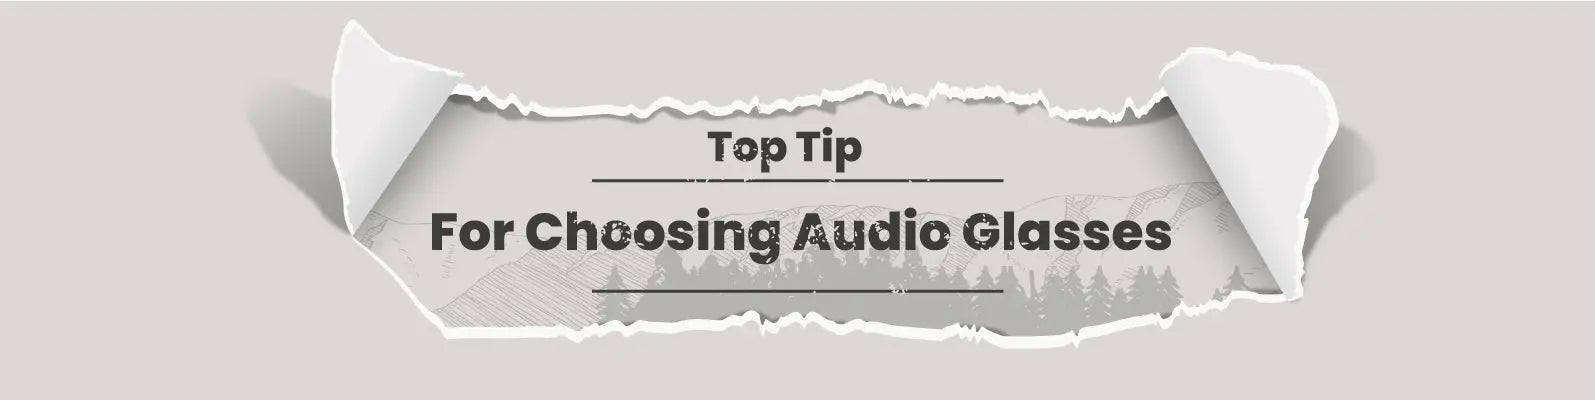 Top Tip For Choosing Smart Audio Glasses